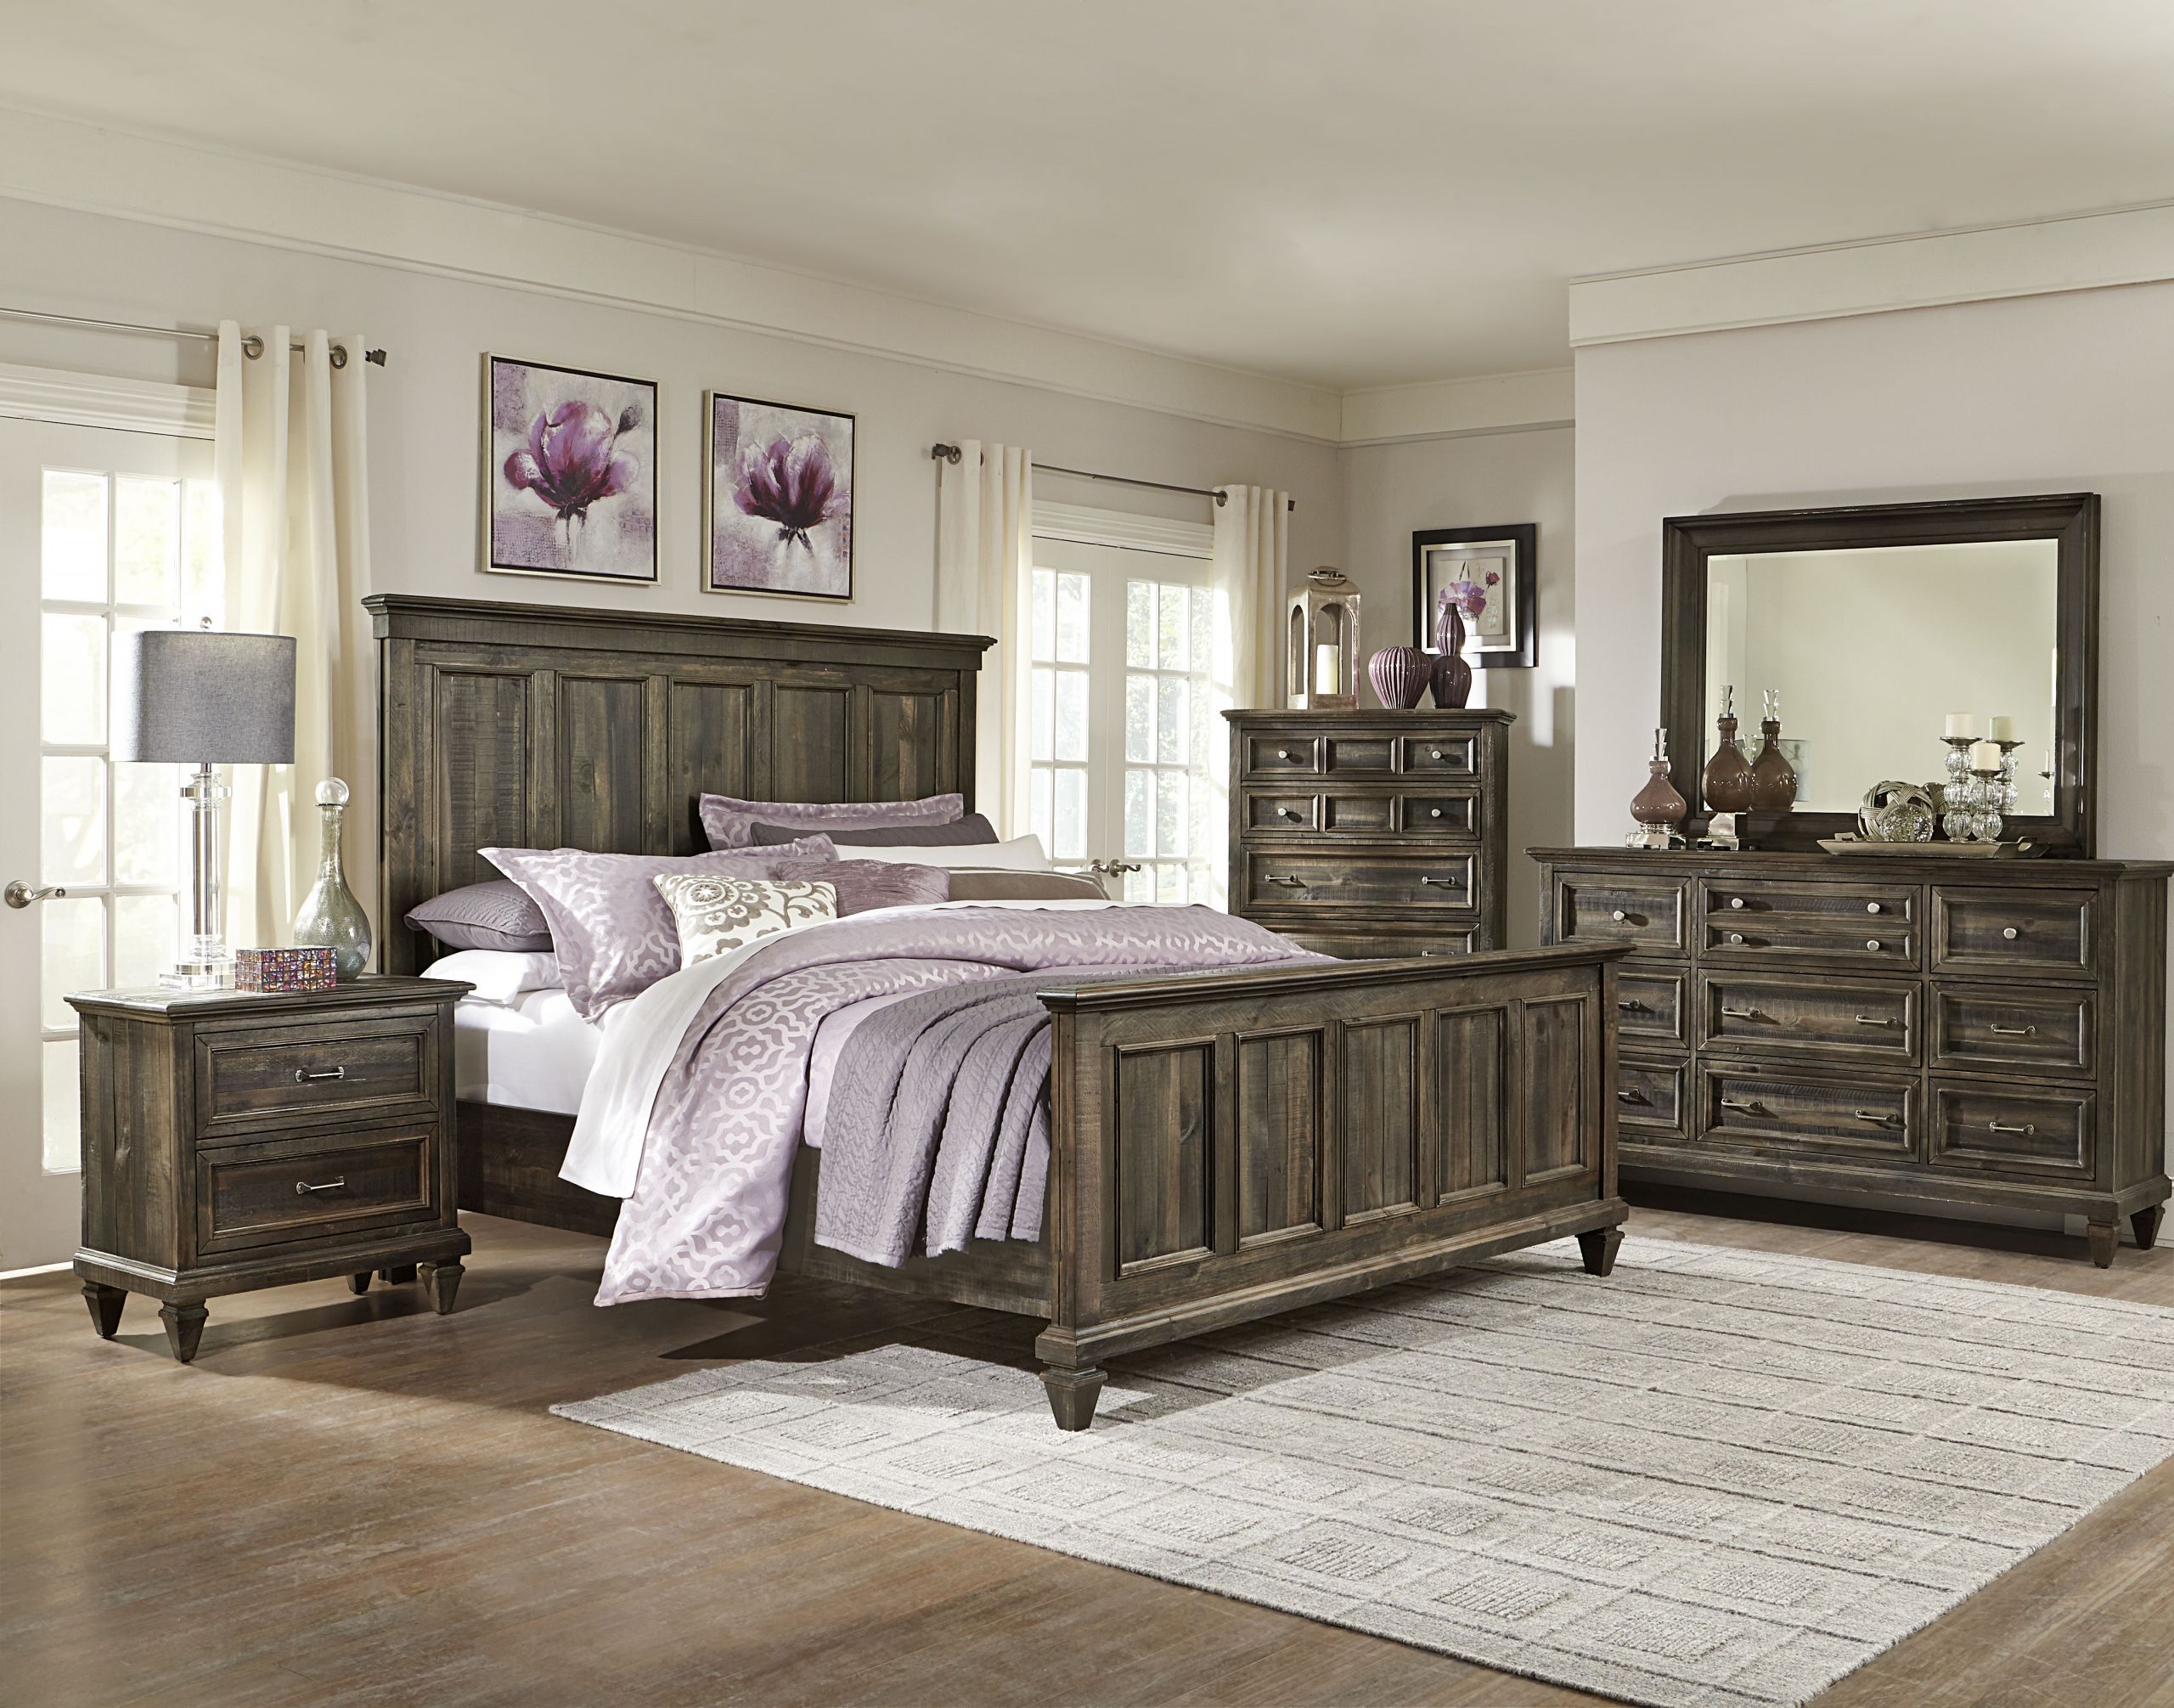 Master Bedroom Bedding Sets
 Calistoga Traditional Weathered Charcoal Wood Master